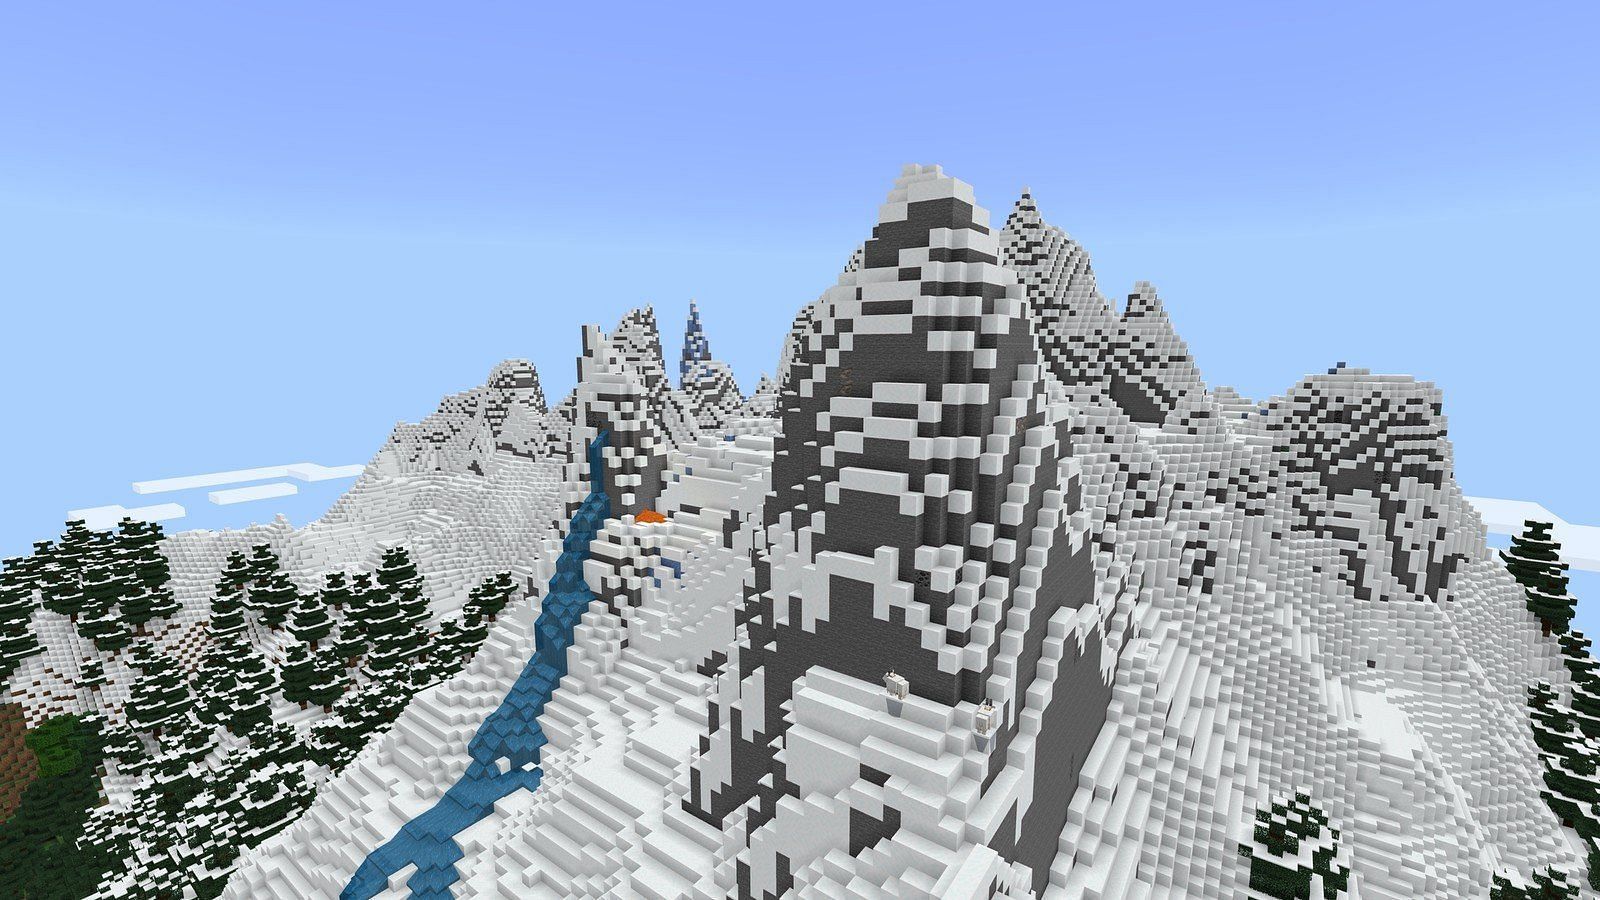 Mountains with steep cliffs in Minecraft (Image via Minecraft)